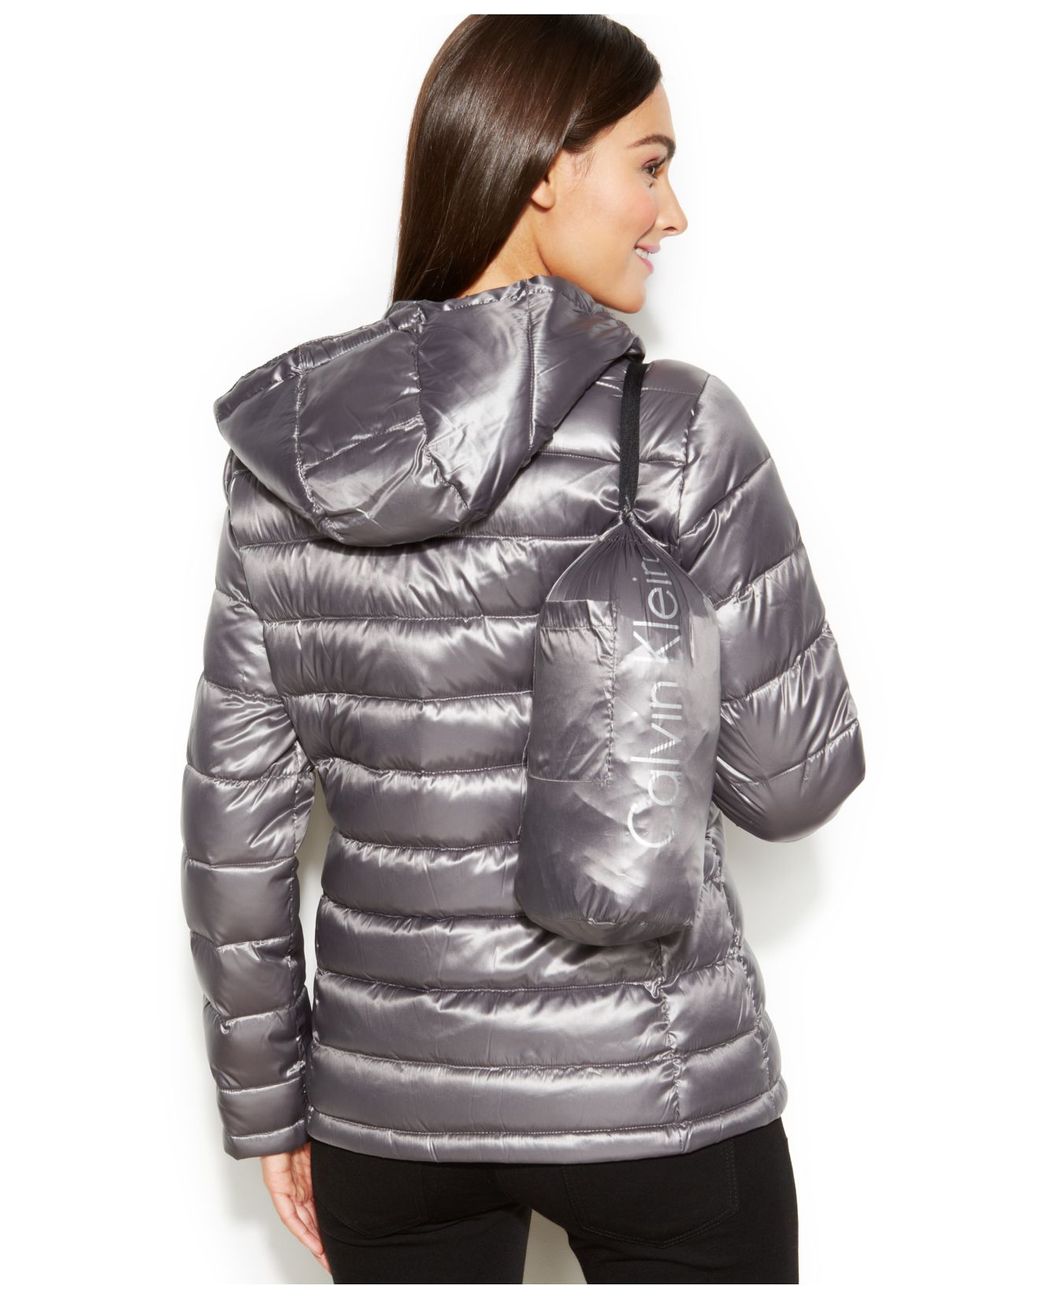 Introducir 39+ imagen calvin klein packable down jacket with hood